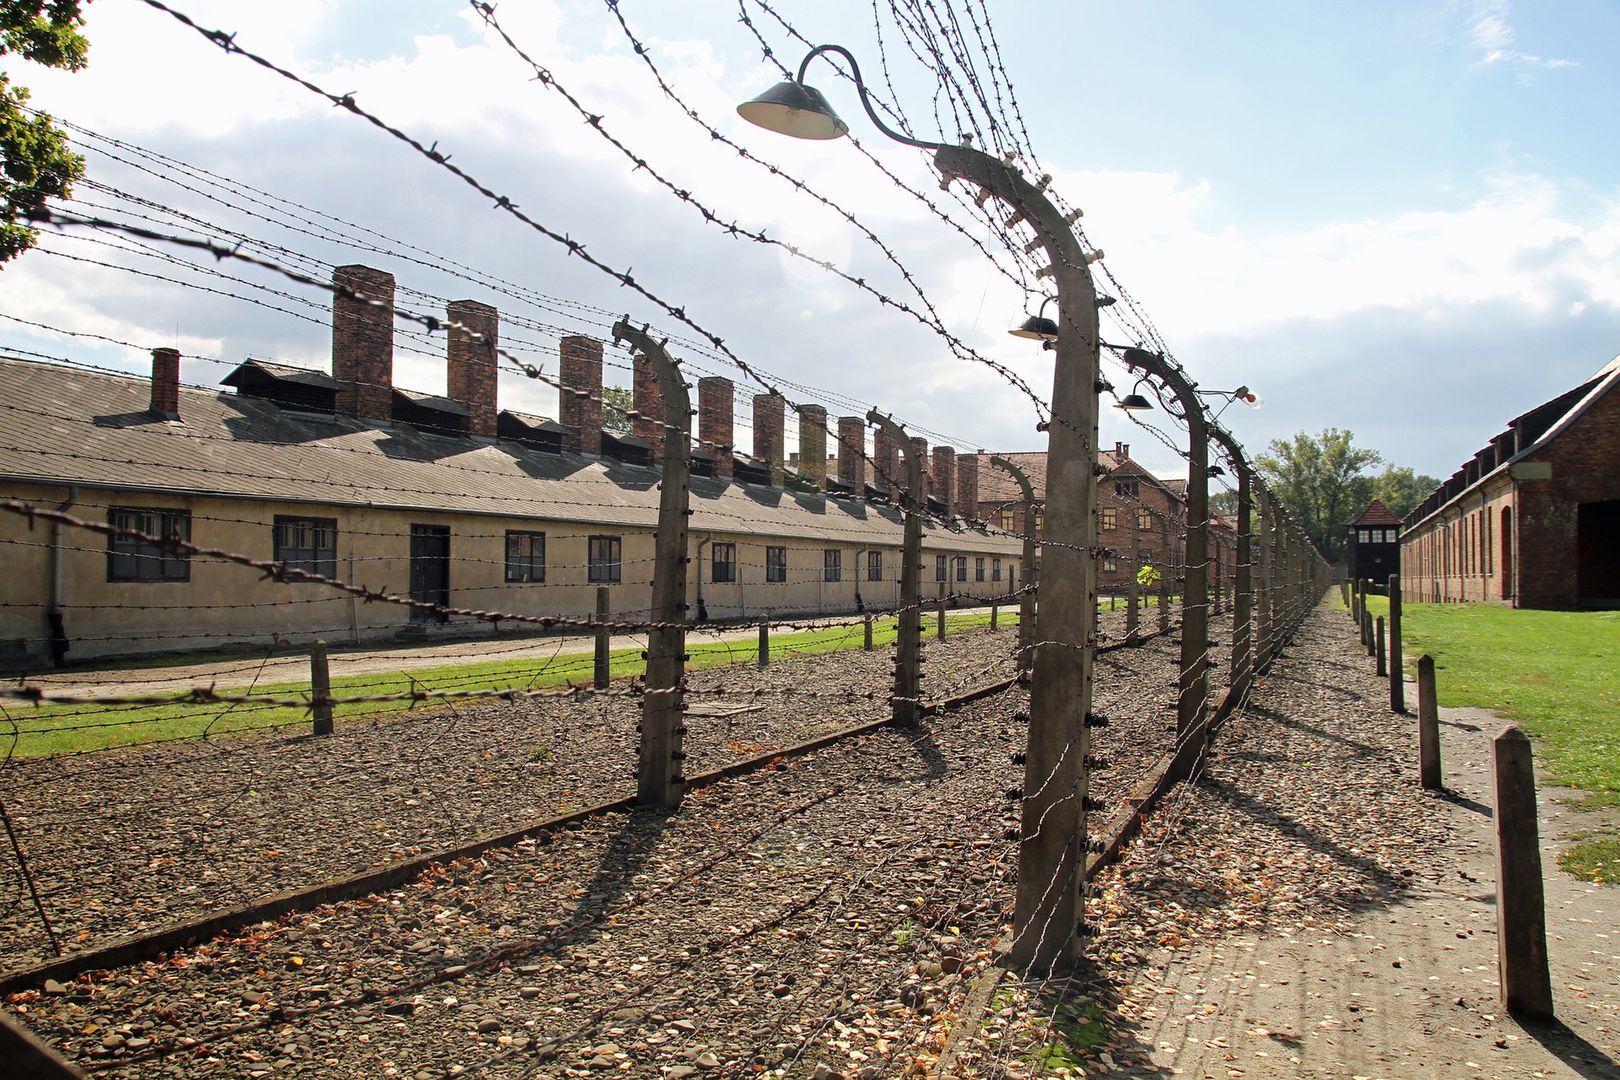 Znowu napisali o "polskim obozie koncentracyjnym"